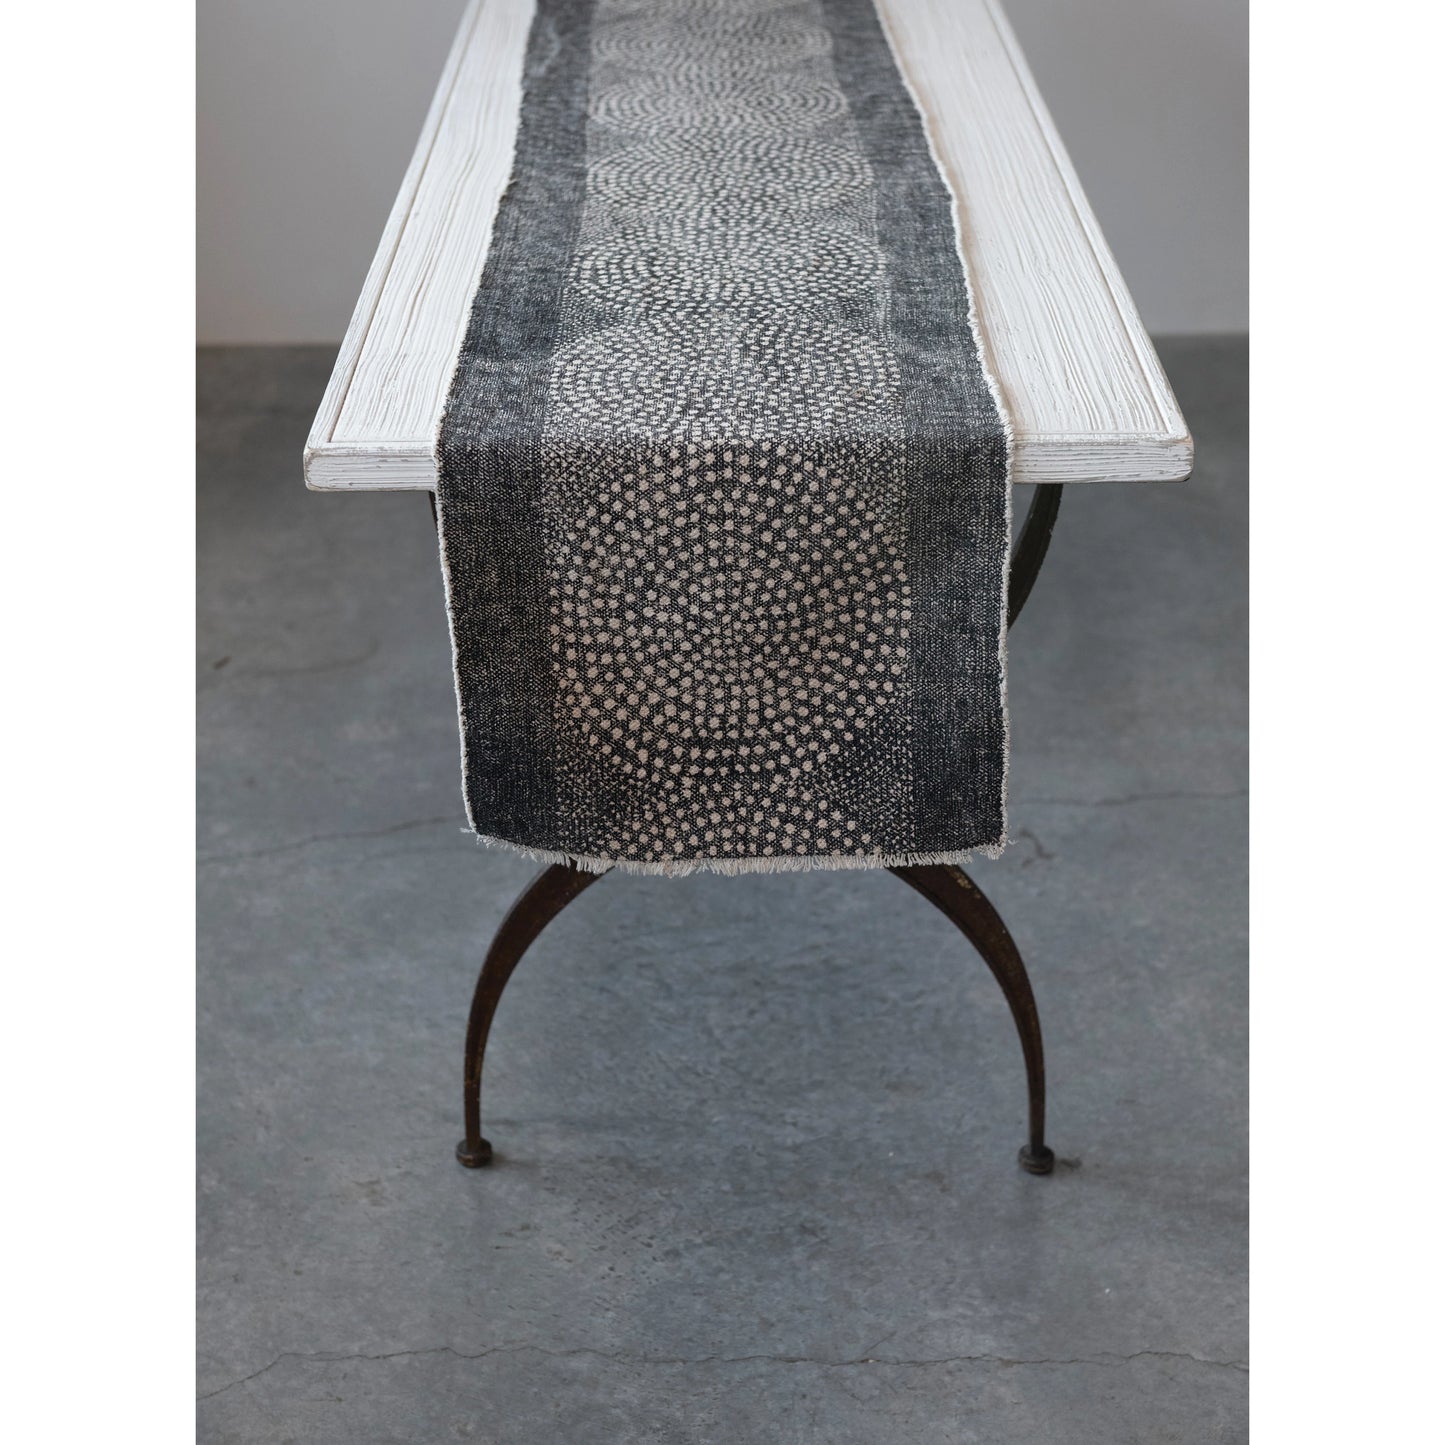 Stonewashed Cotton Canvas Table Runner w/ Frayed Edges | Dot Pattern | Black &White